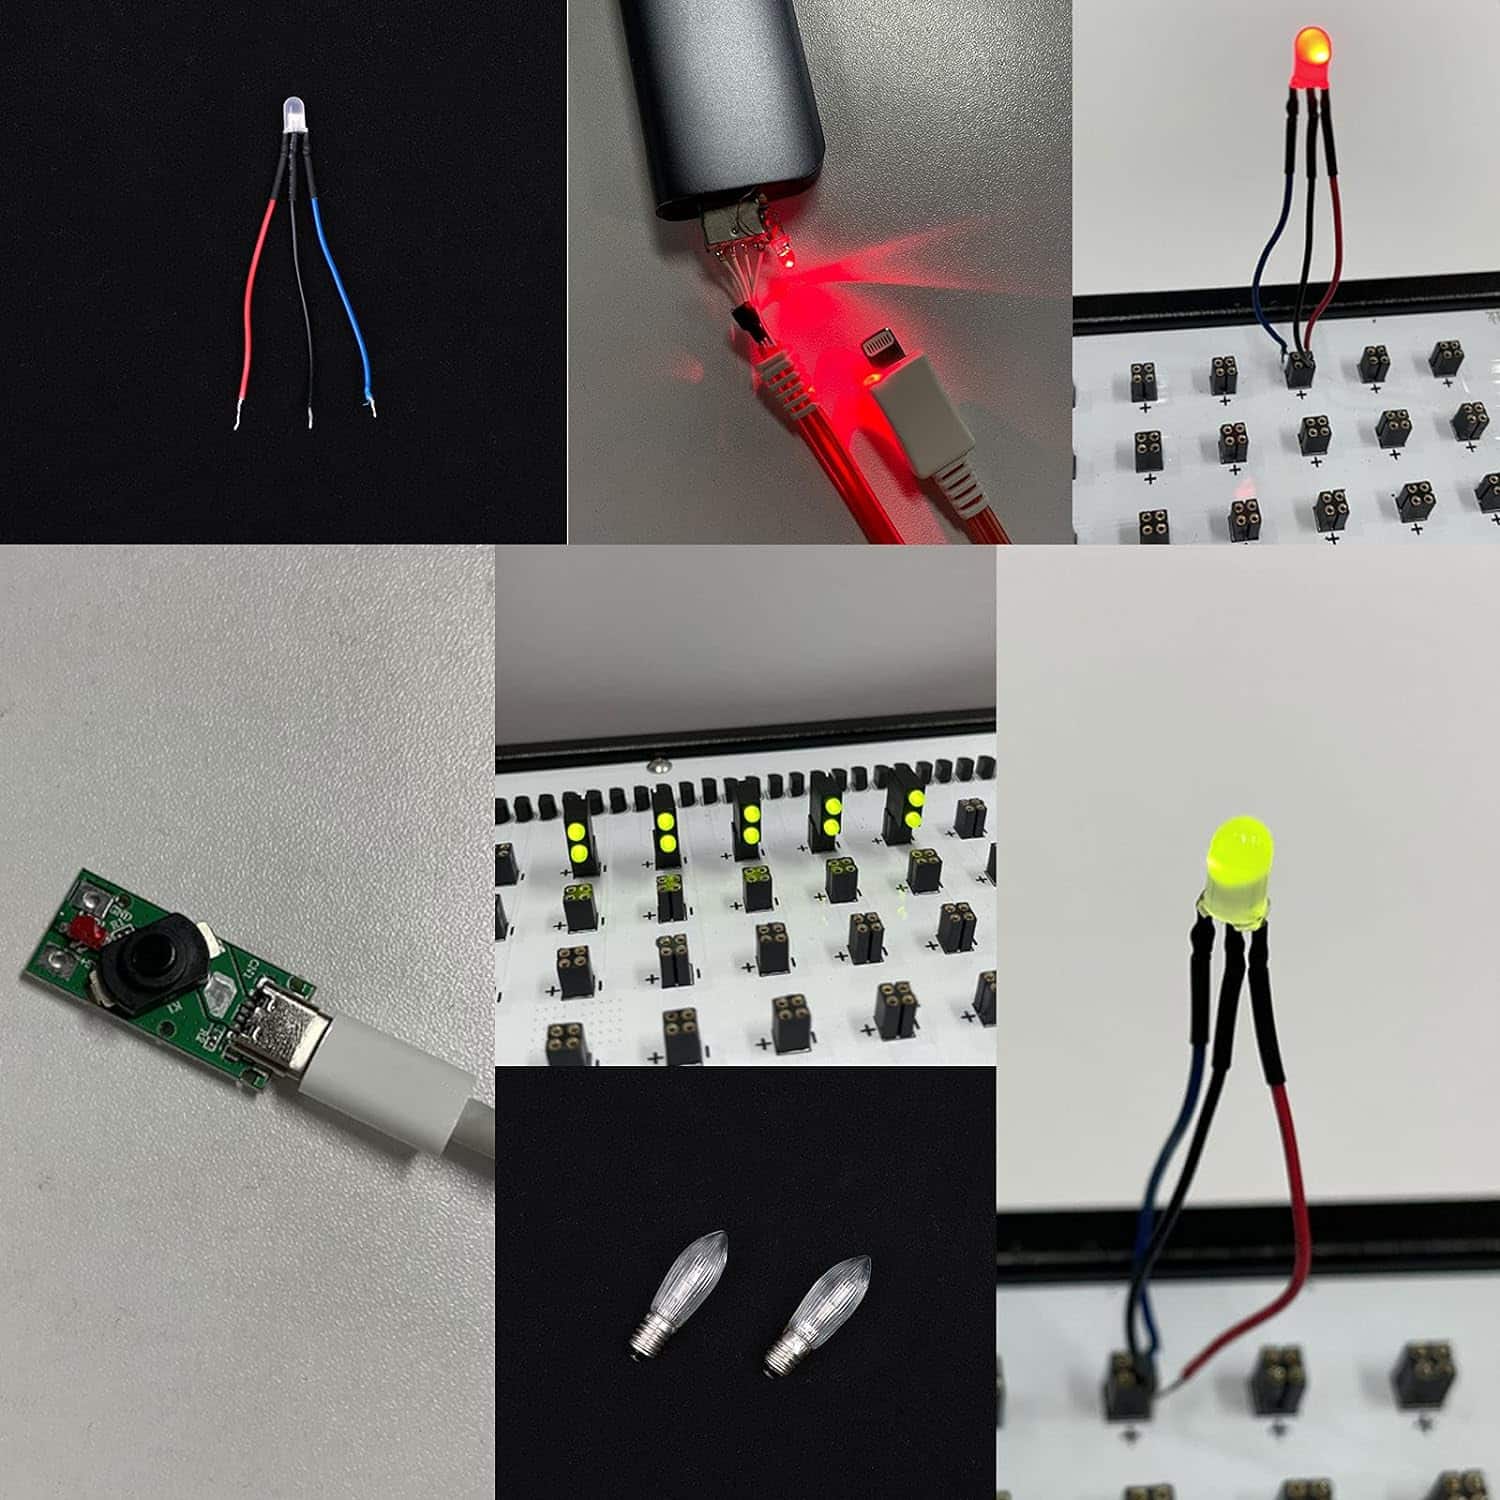 100 Pcs 3mm LED Light Emitting Diodes Bulb LED Lamp- Clear and Transparent DC 2V 20mA DIY Science Project Electronics Components Lighting Kit (5*Color*20pcs)